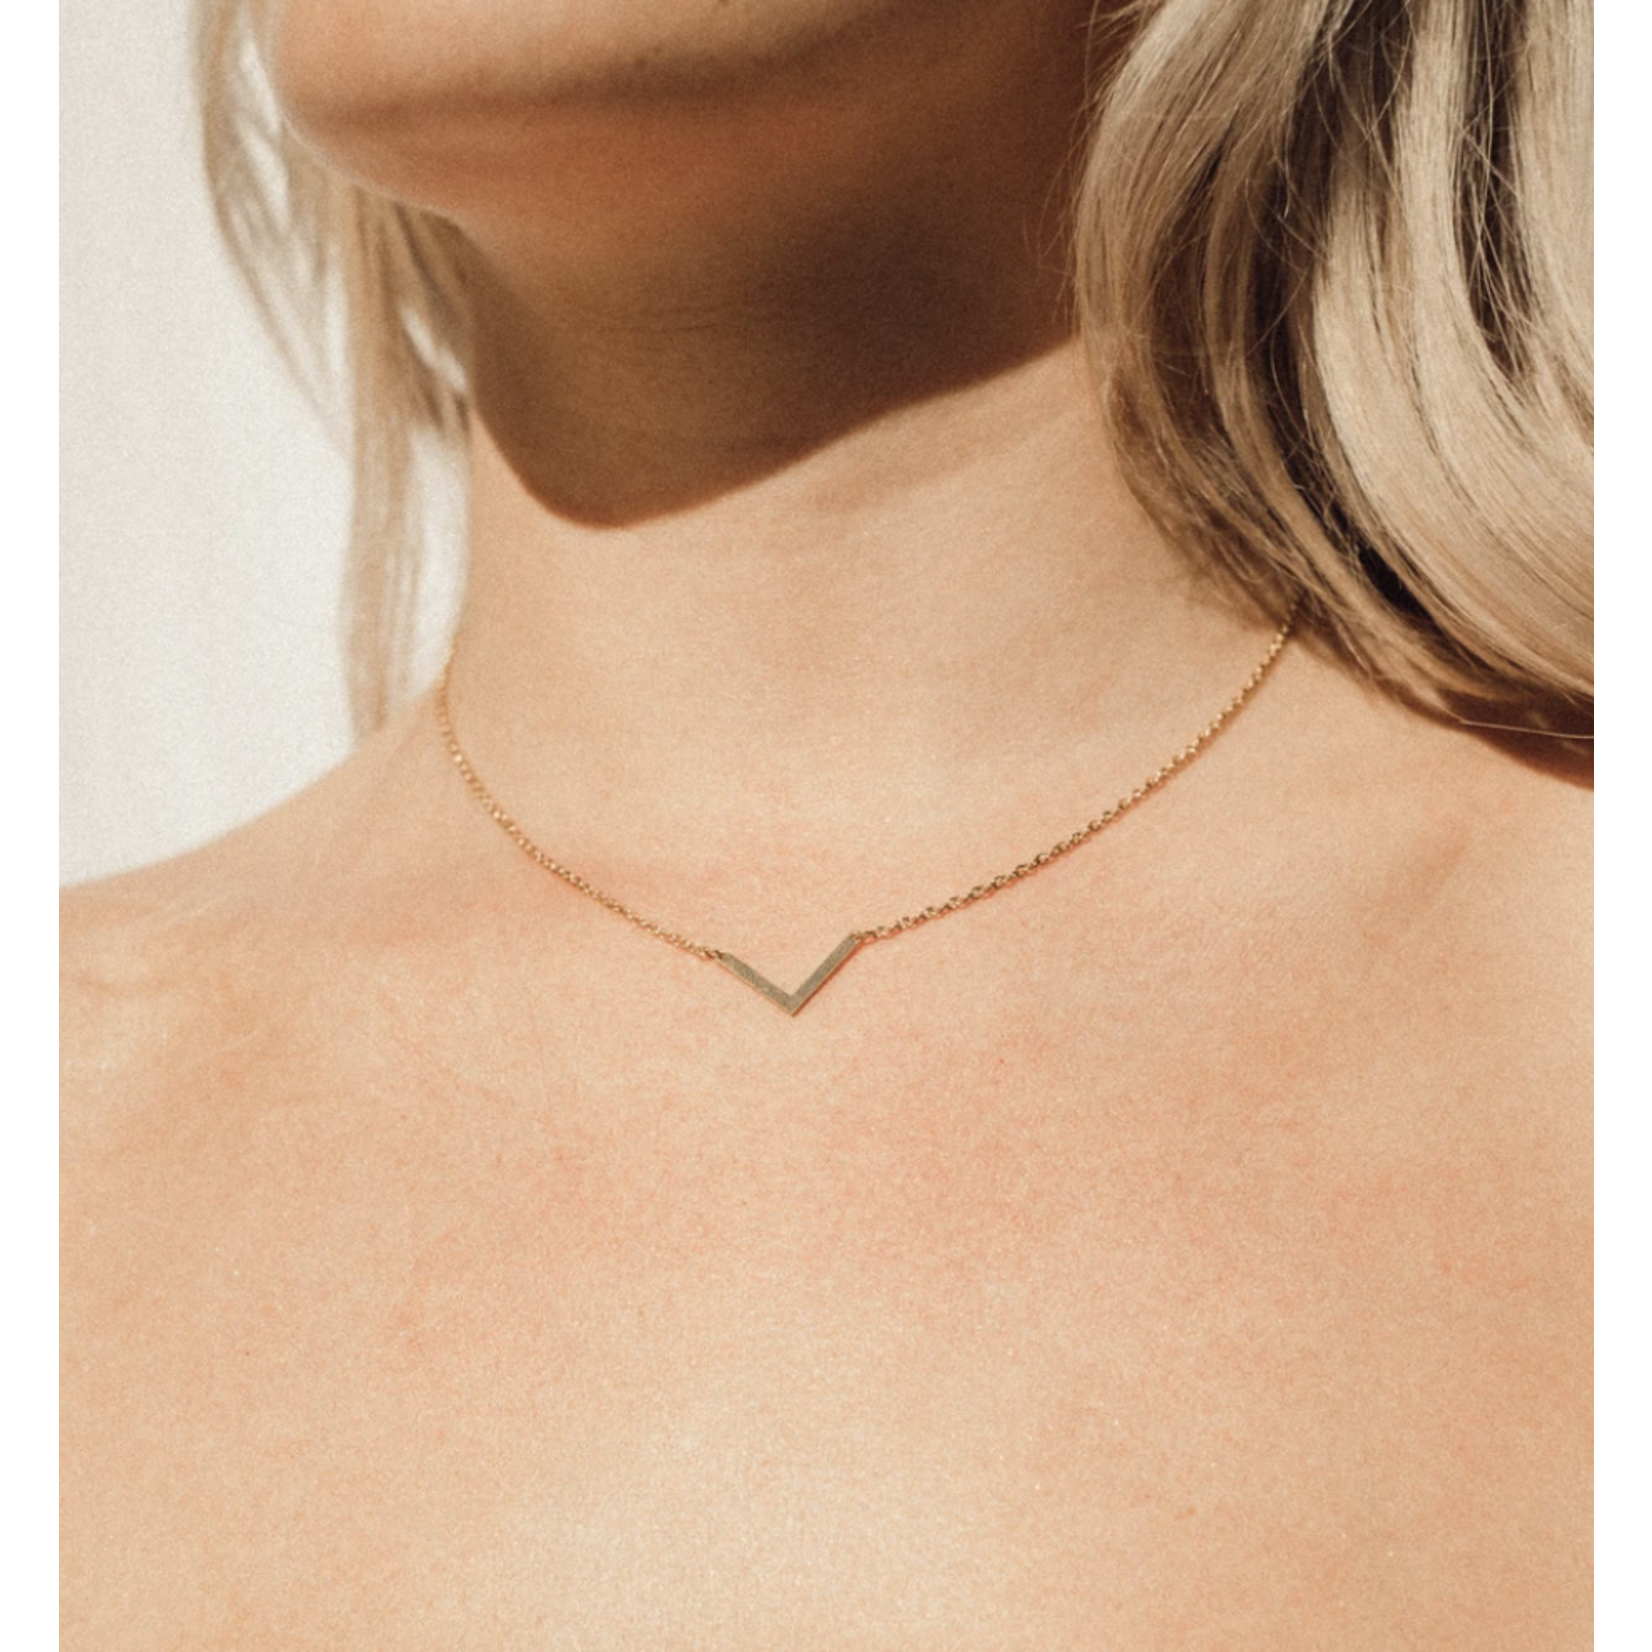 Lumiela 'Extraordinary Things Ahead' Gold Arrowhead Necklace by Lumiela